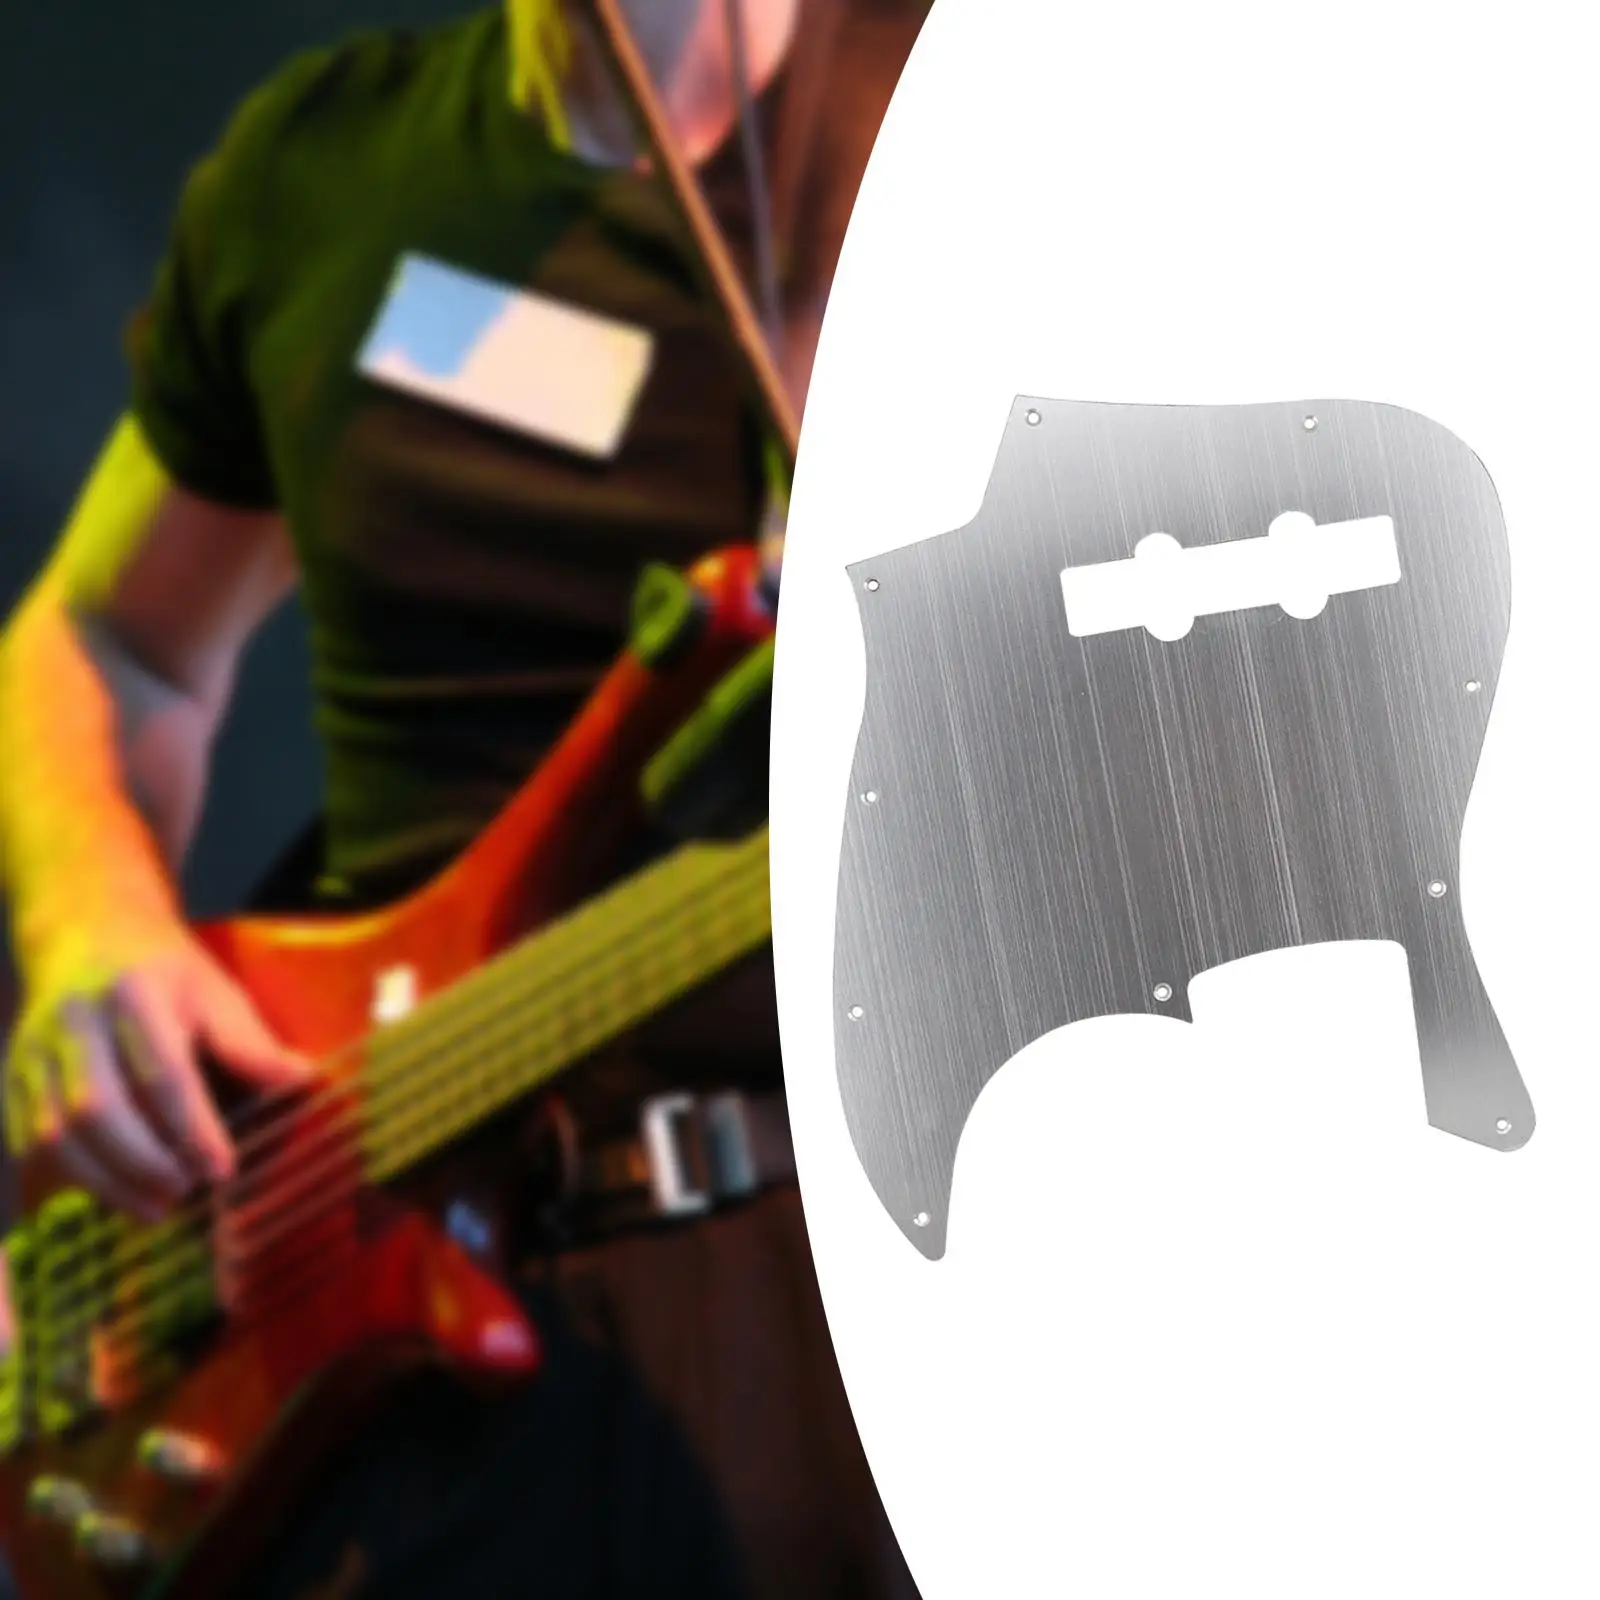 10 Holes Bass Jazz Pickguard Lightweight with Screws Guitar Pickguard for 4 Strings Mexican Standard Bass Instruments Accessory